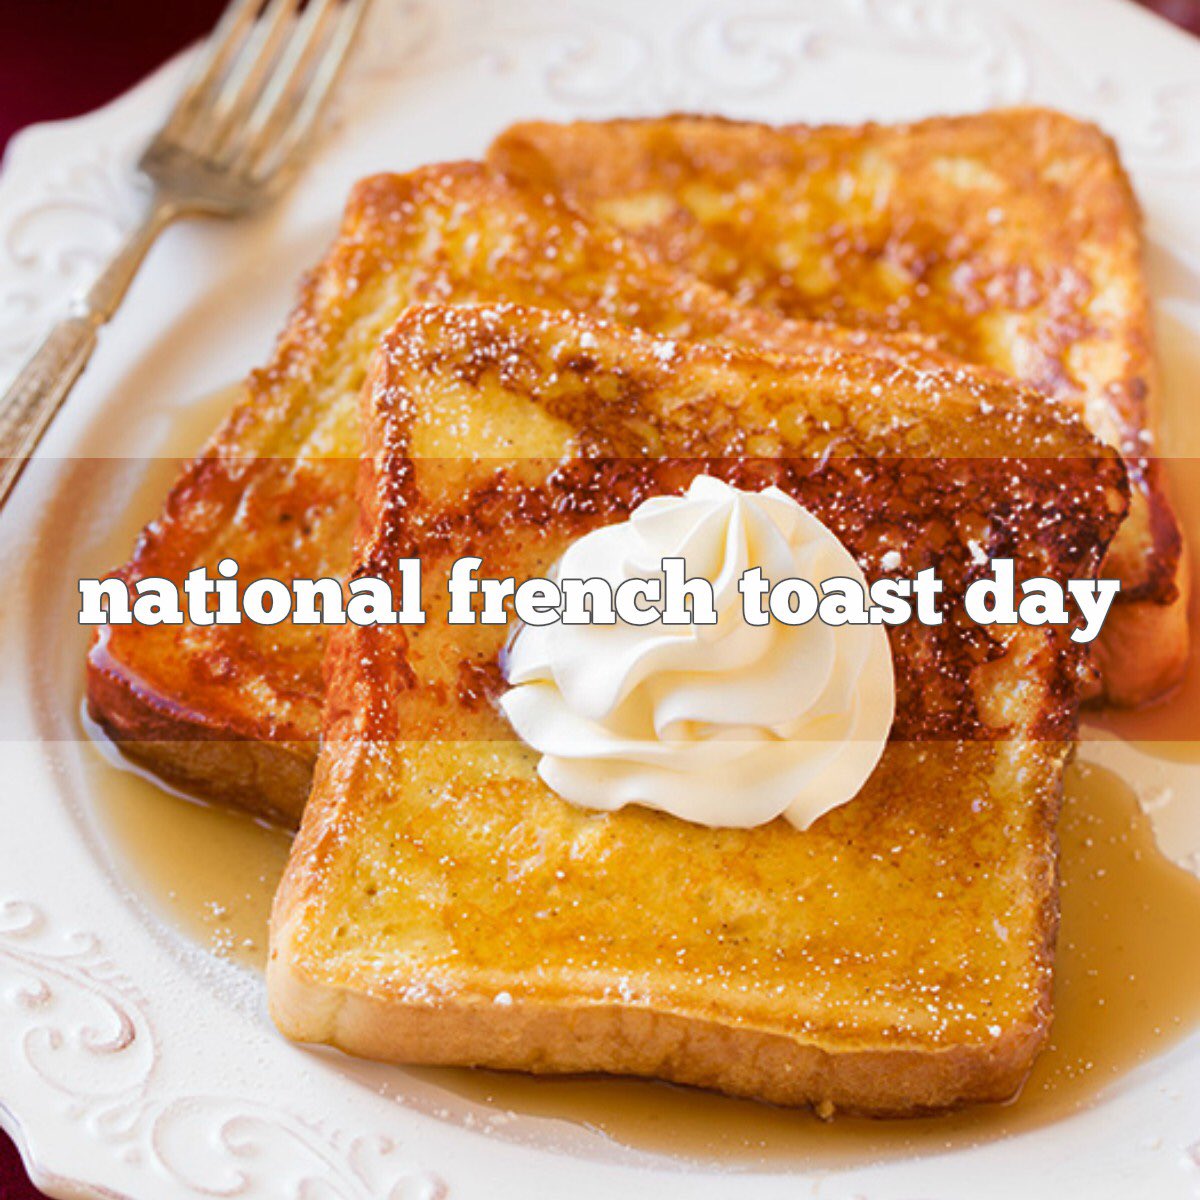 Happy #NationalFrenchToastDay! 🍞 *** #HopeYoureSmiling! *** 😋 #FrenchToastDay #FrenchToast #Yum #Yummy #Delicious #BreakfastFood #BreakfastDessert #Dessert #HealthyEating #HealthFood #DietFood #Diet #Syrup #NomNomNom